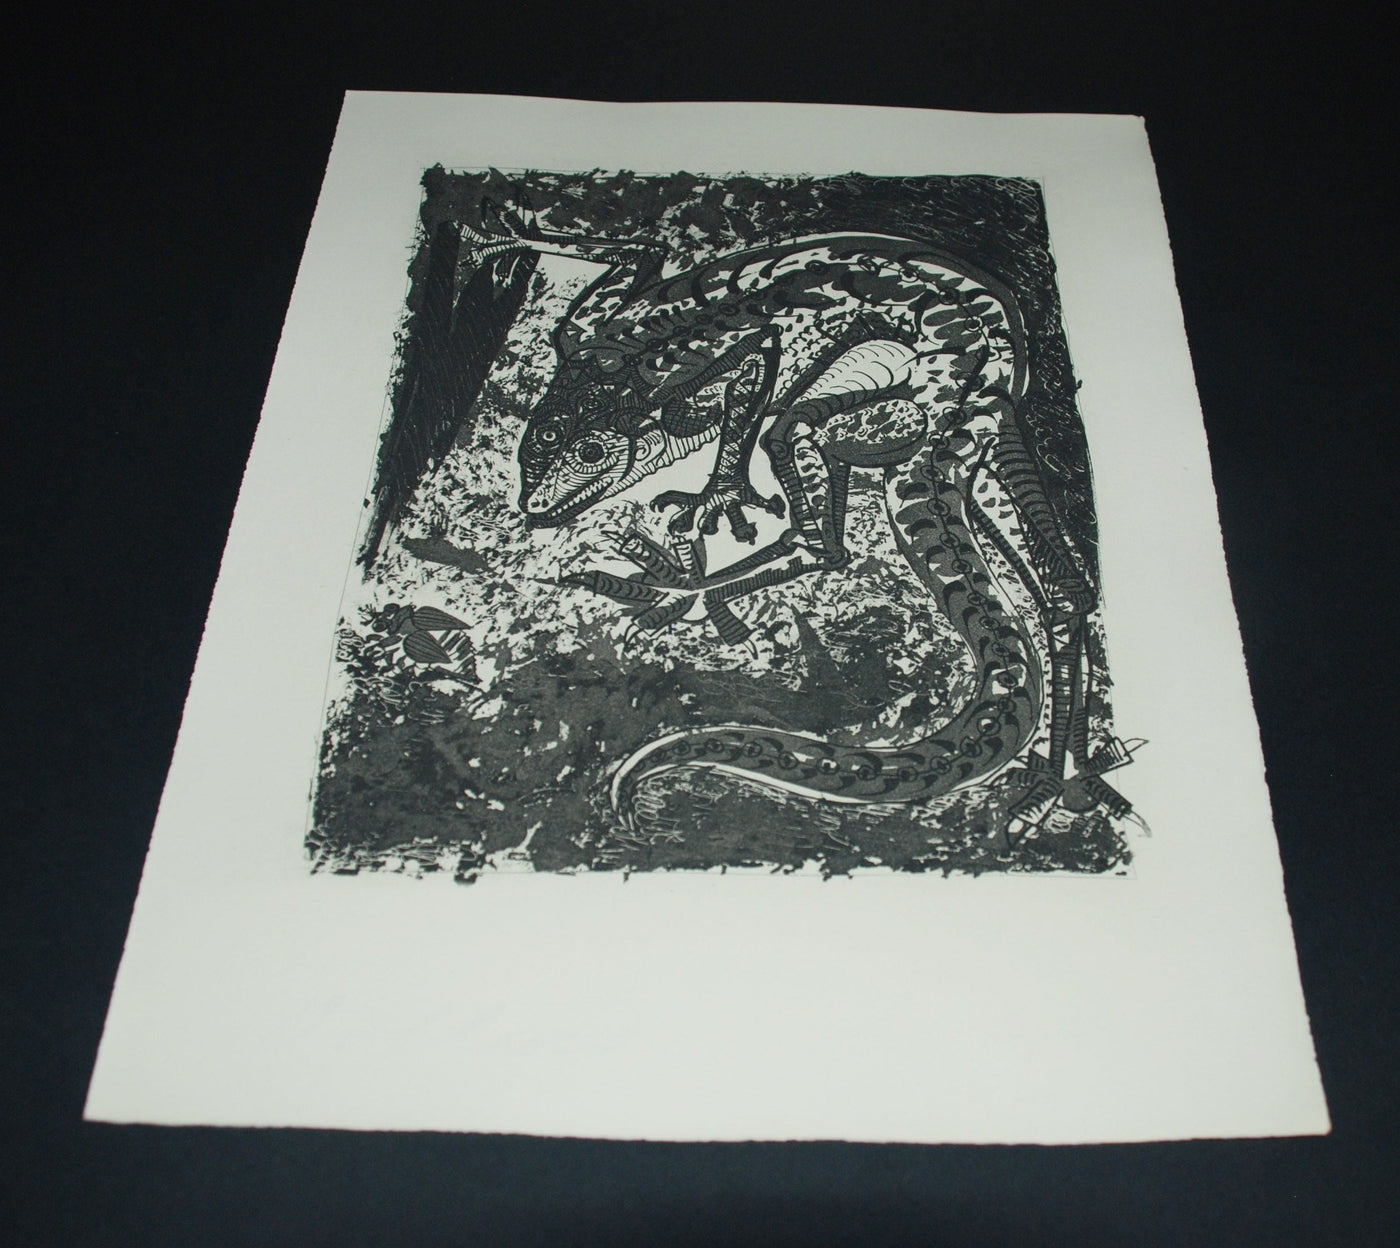 Pablo Picasso Le Lezard (The Lizard) (Bloch 344, Cramer No. 37) 1942